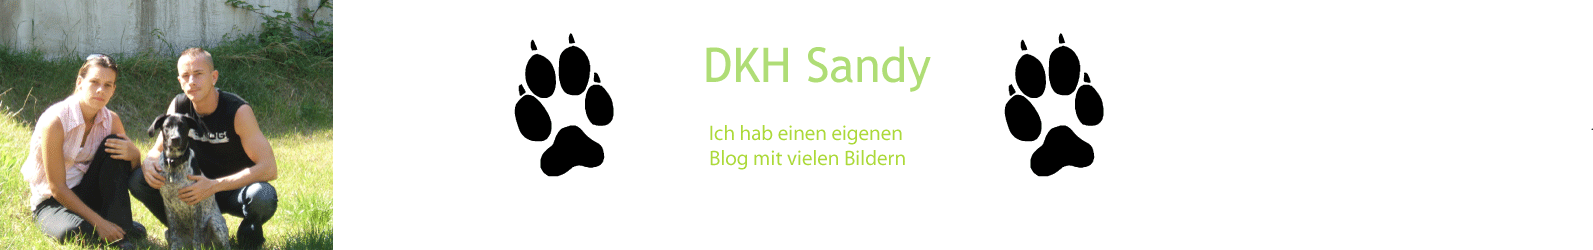 DKH Sandy